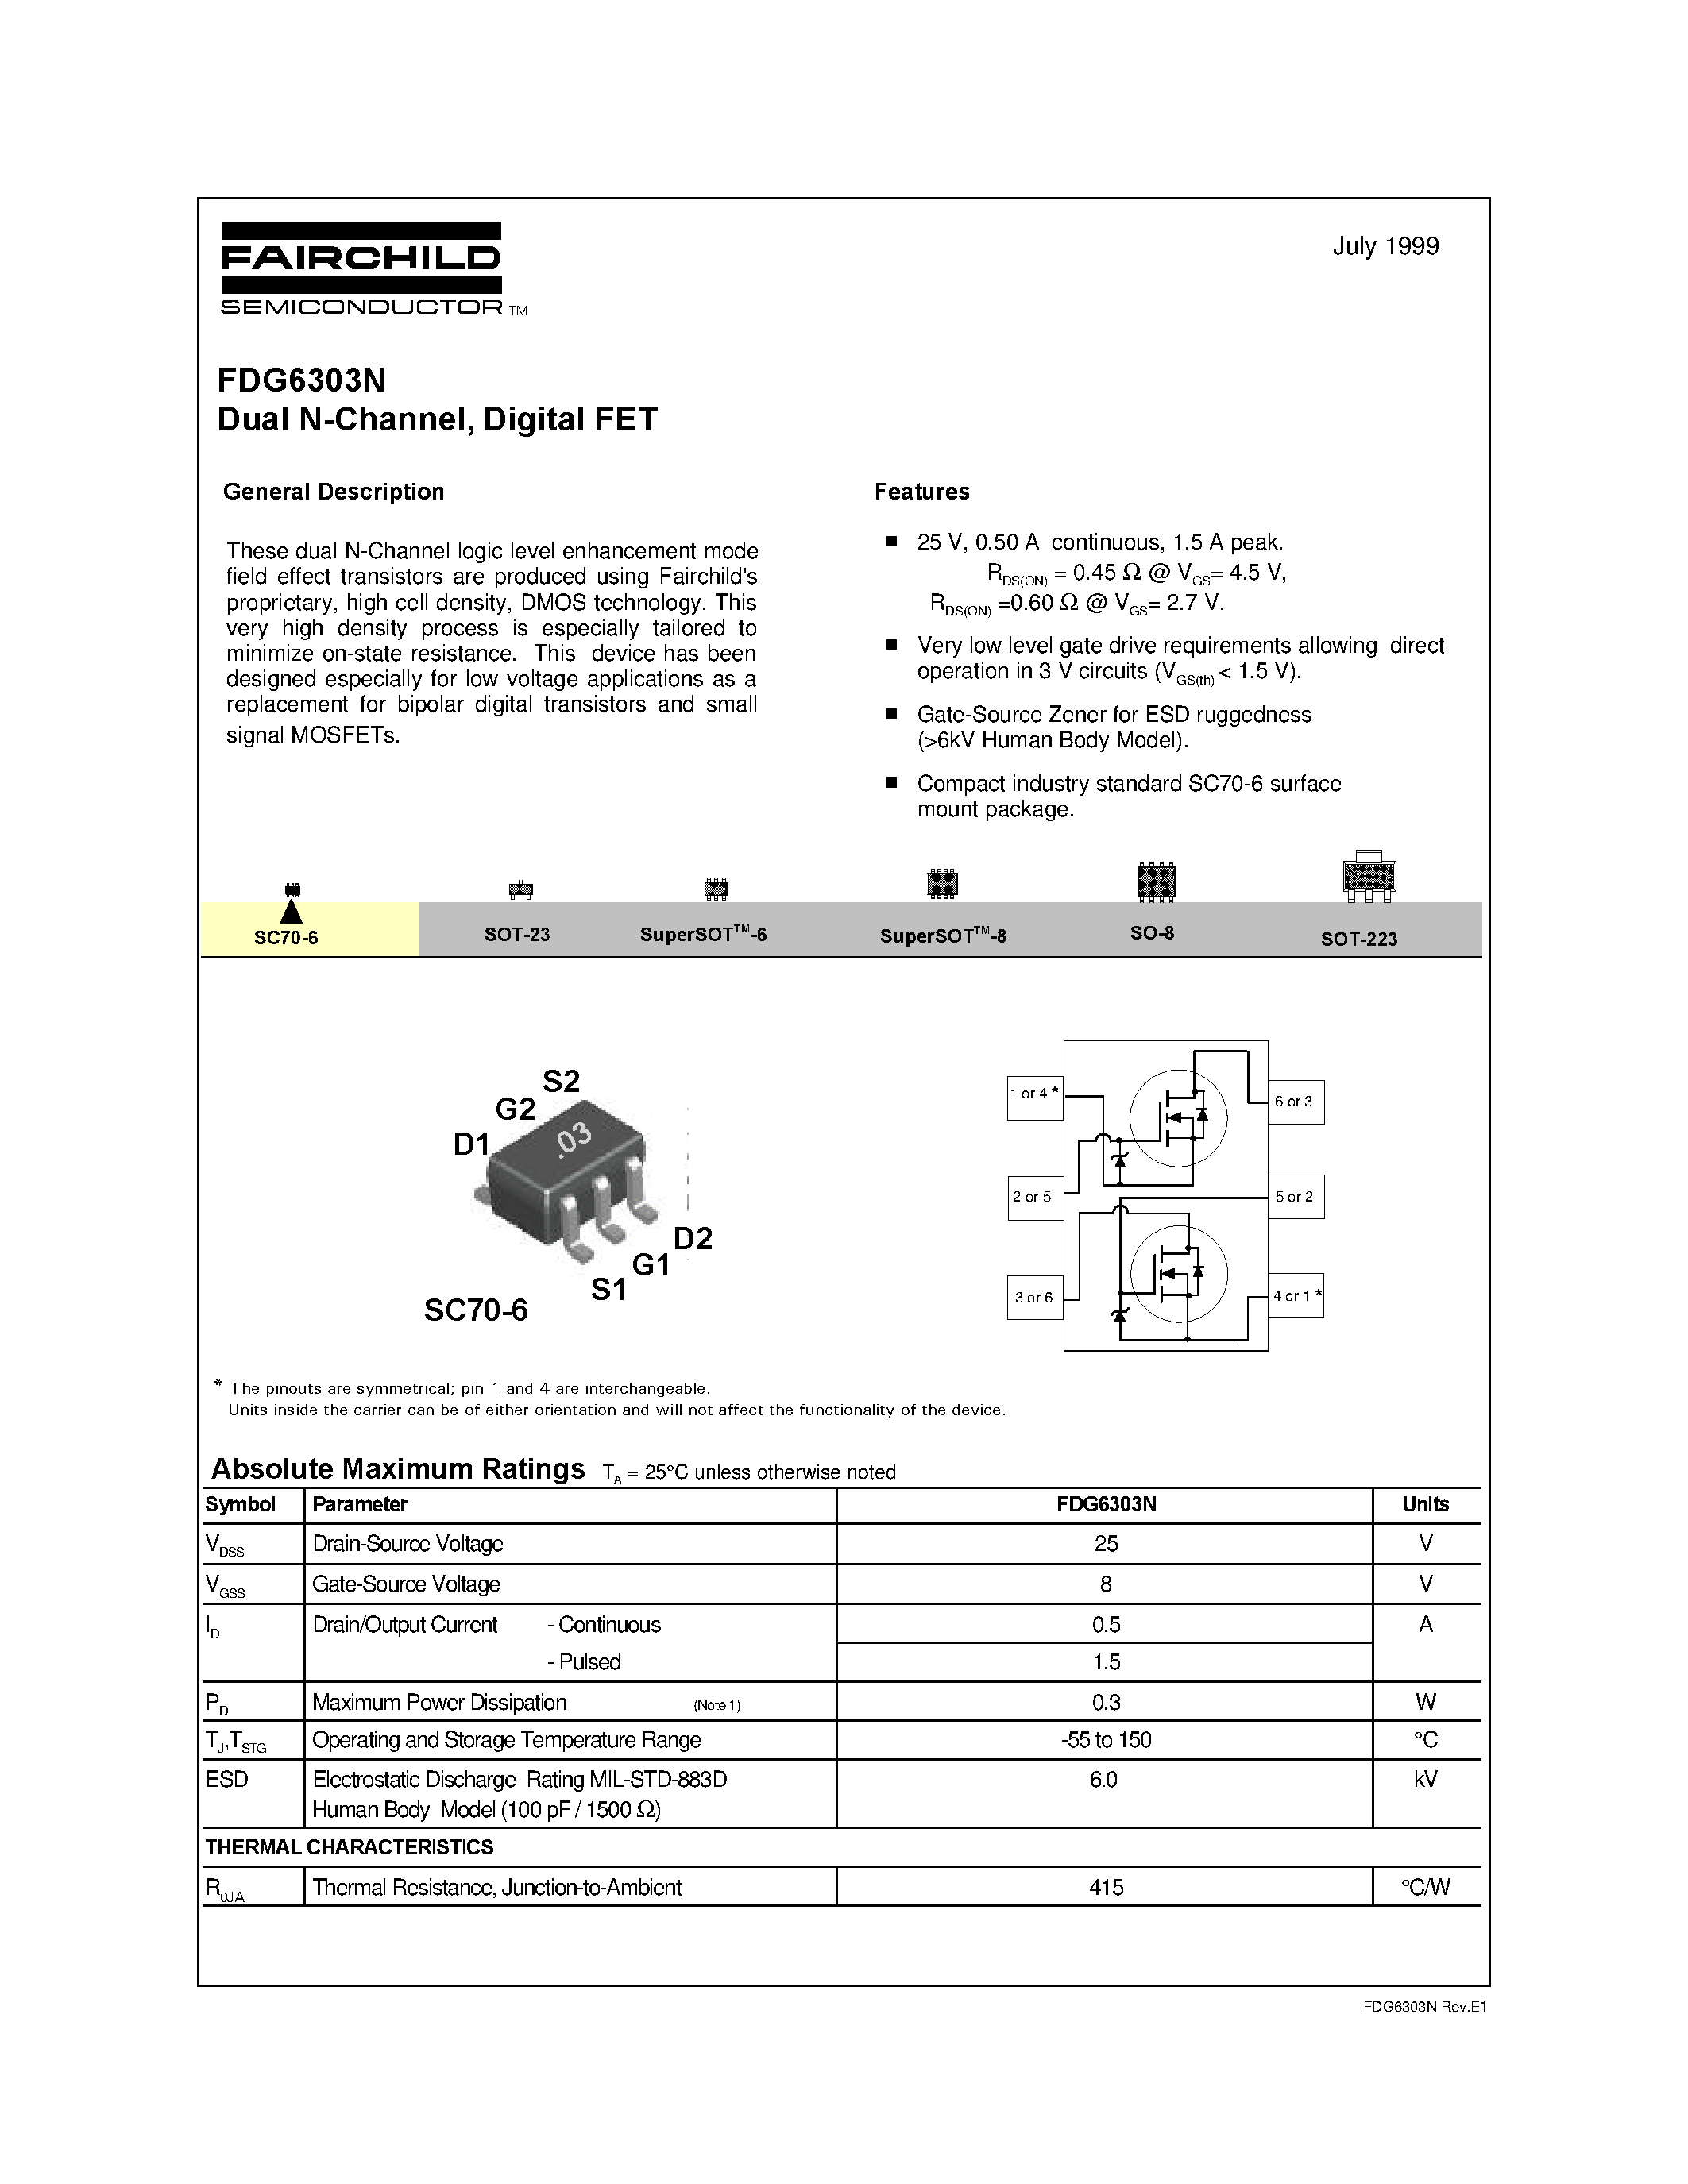 Datasheet FDG6303N - Dual N-Channel/ Digital FET page 1